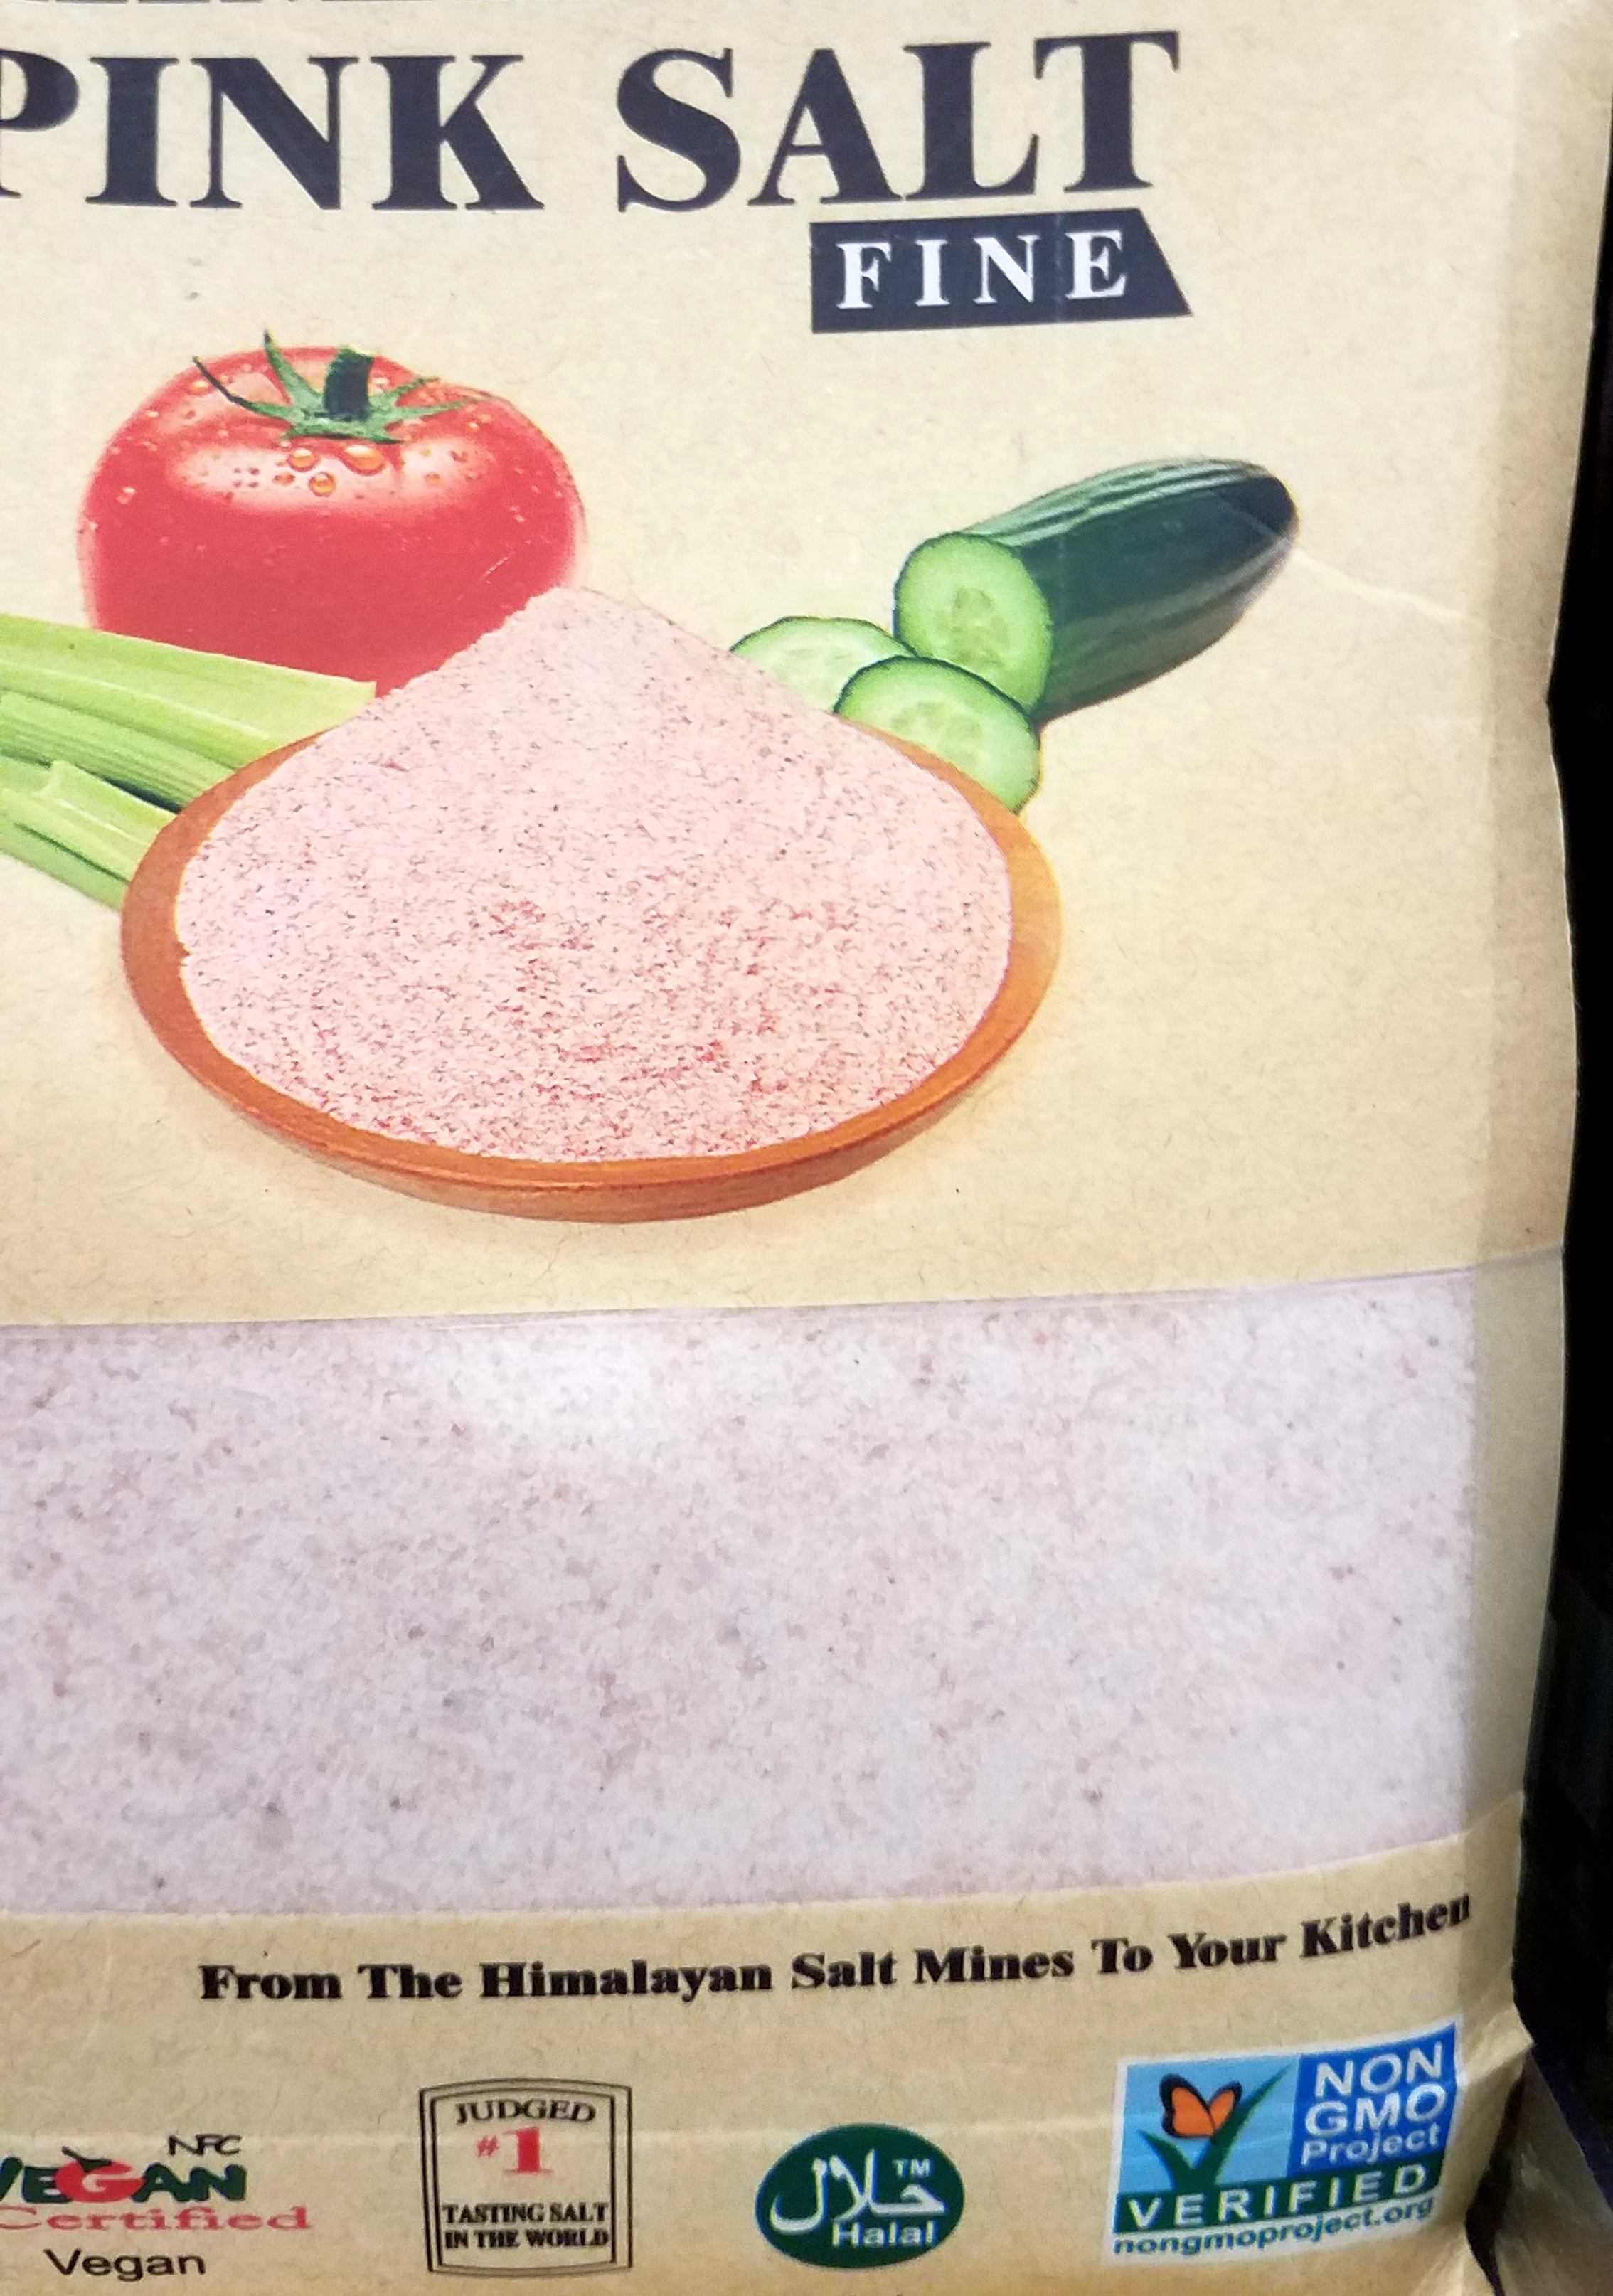 Non-GMO Project label on salt